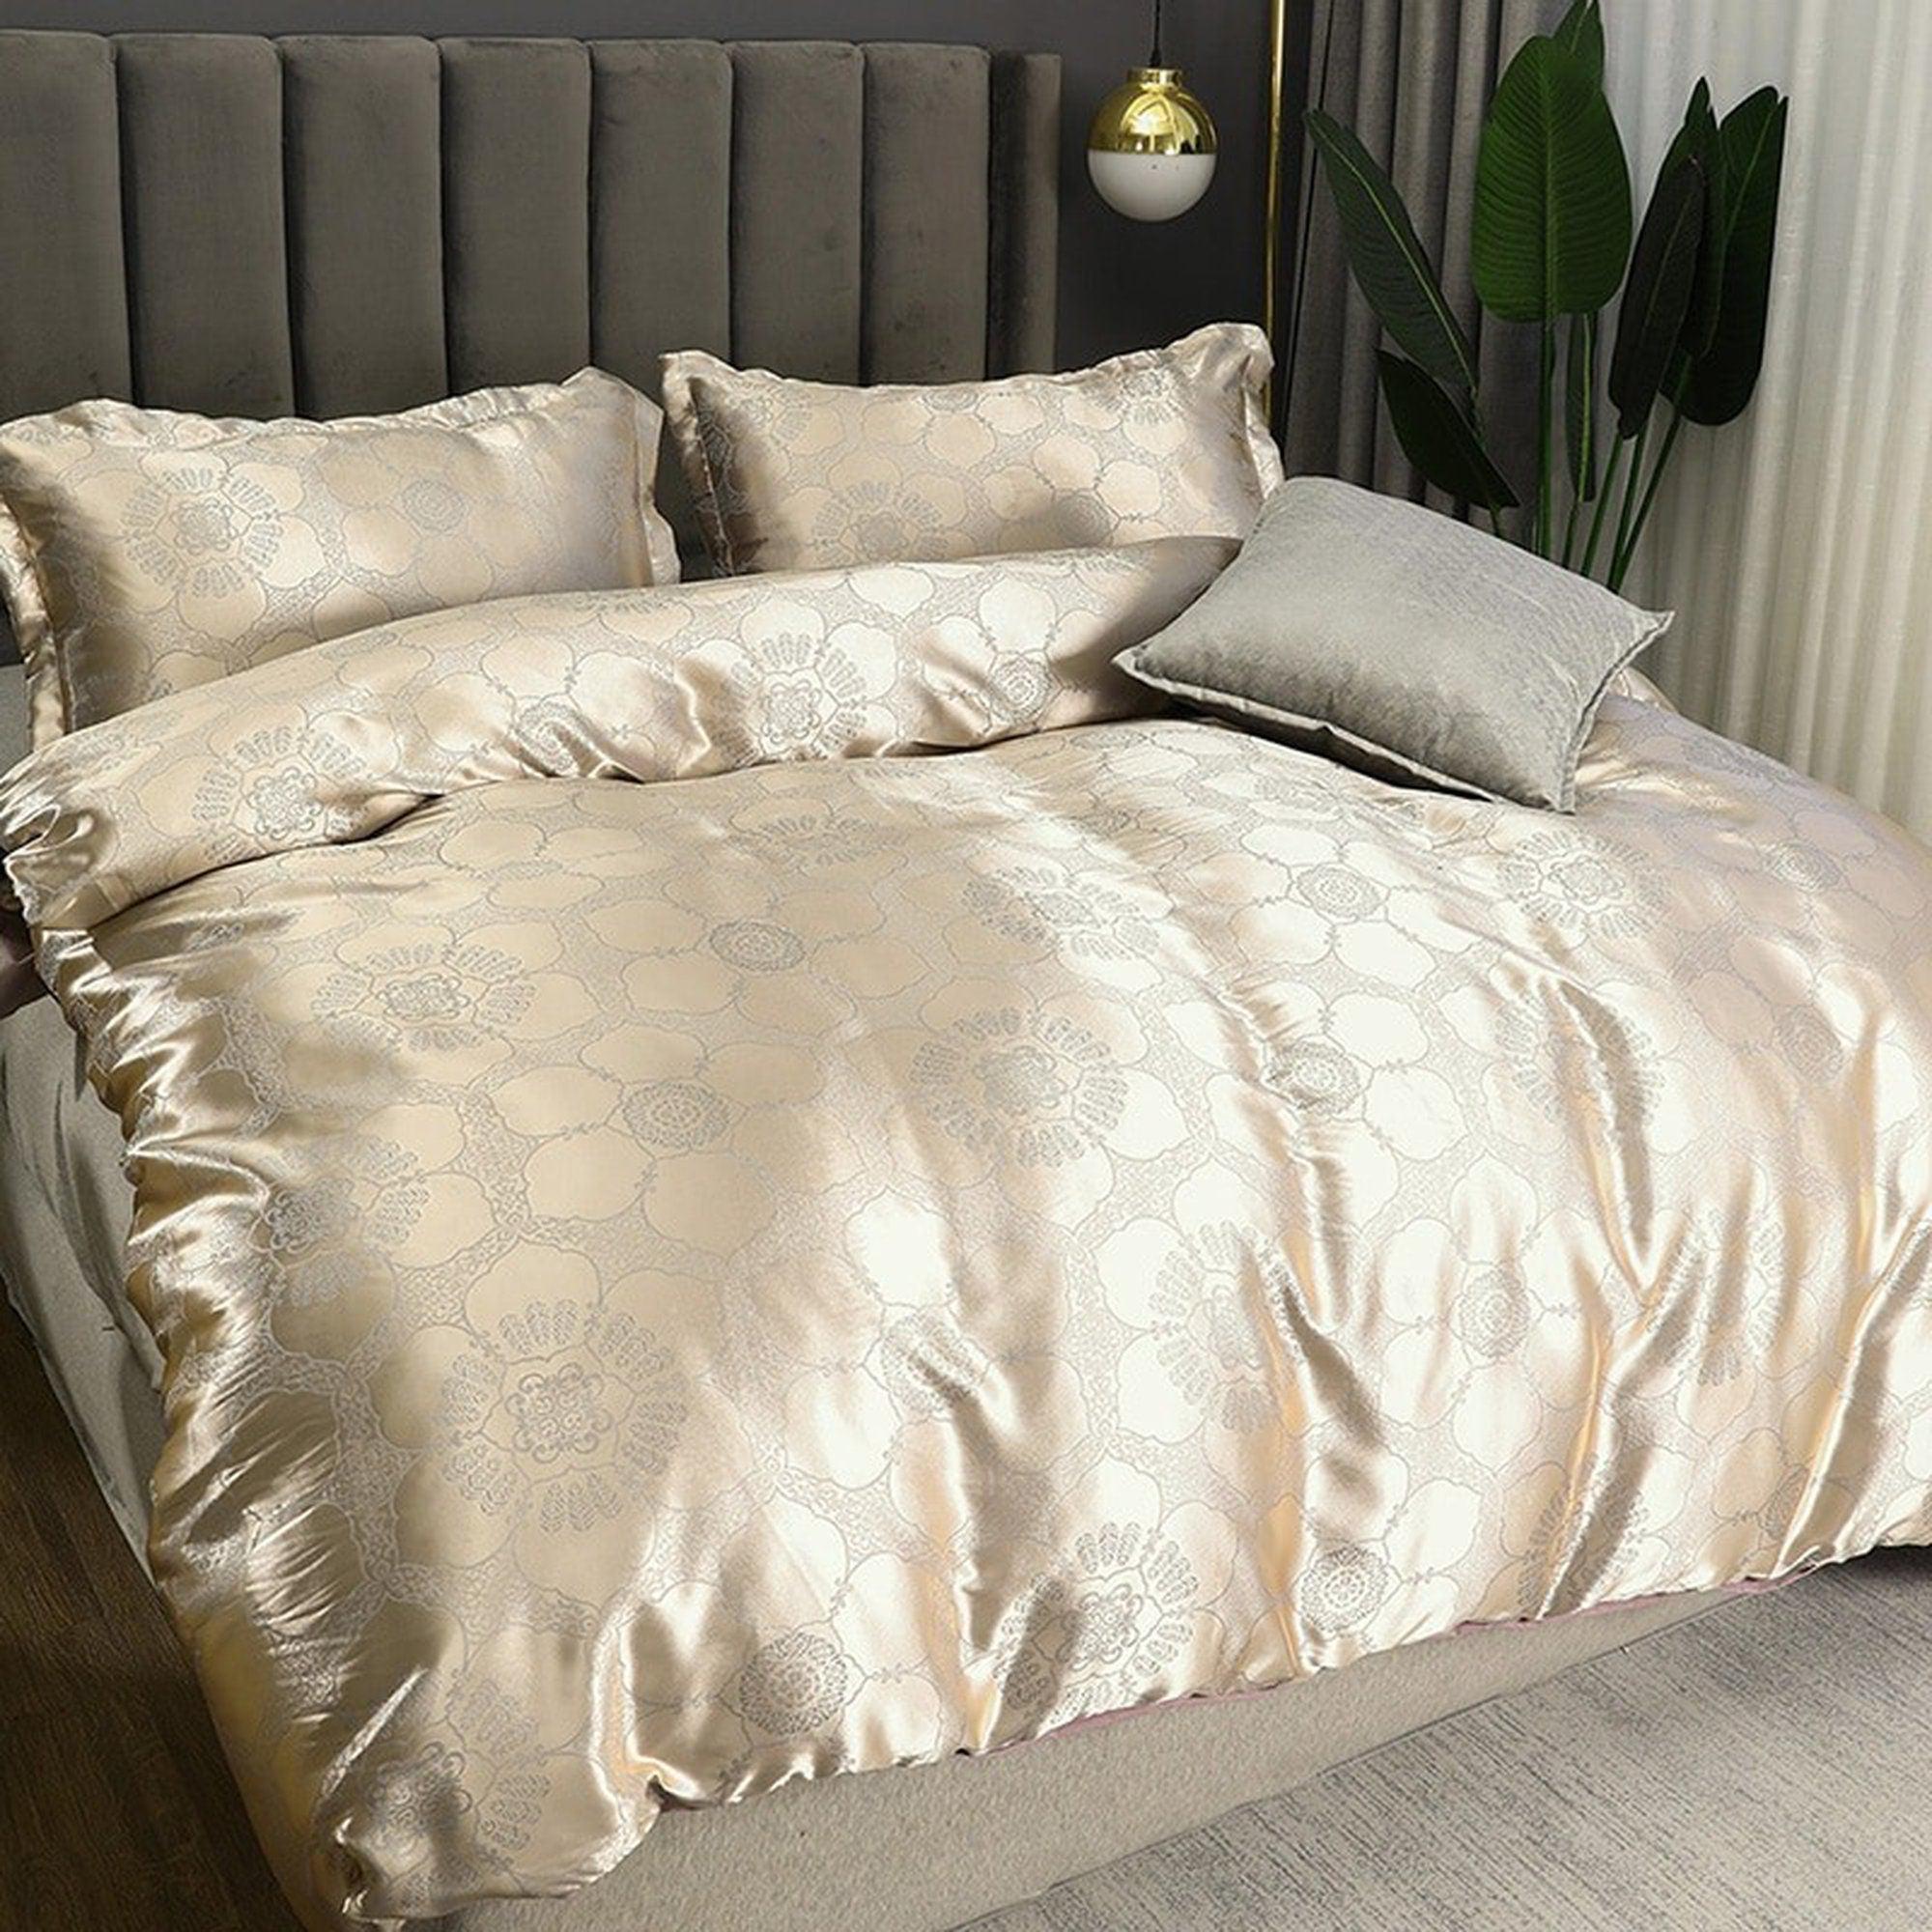 daintyduvet Luxury Golden Floral Bedding made with Silky Jacquard Fabric, Damask Duvet Cover Set, Designer Bedding, Aesthetic Duvet King Queen Full Twin